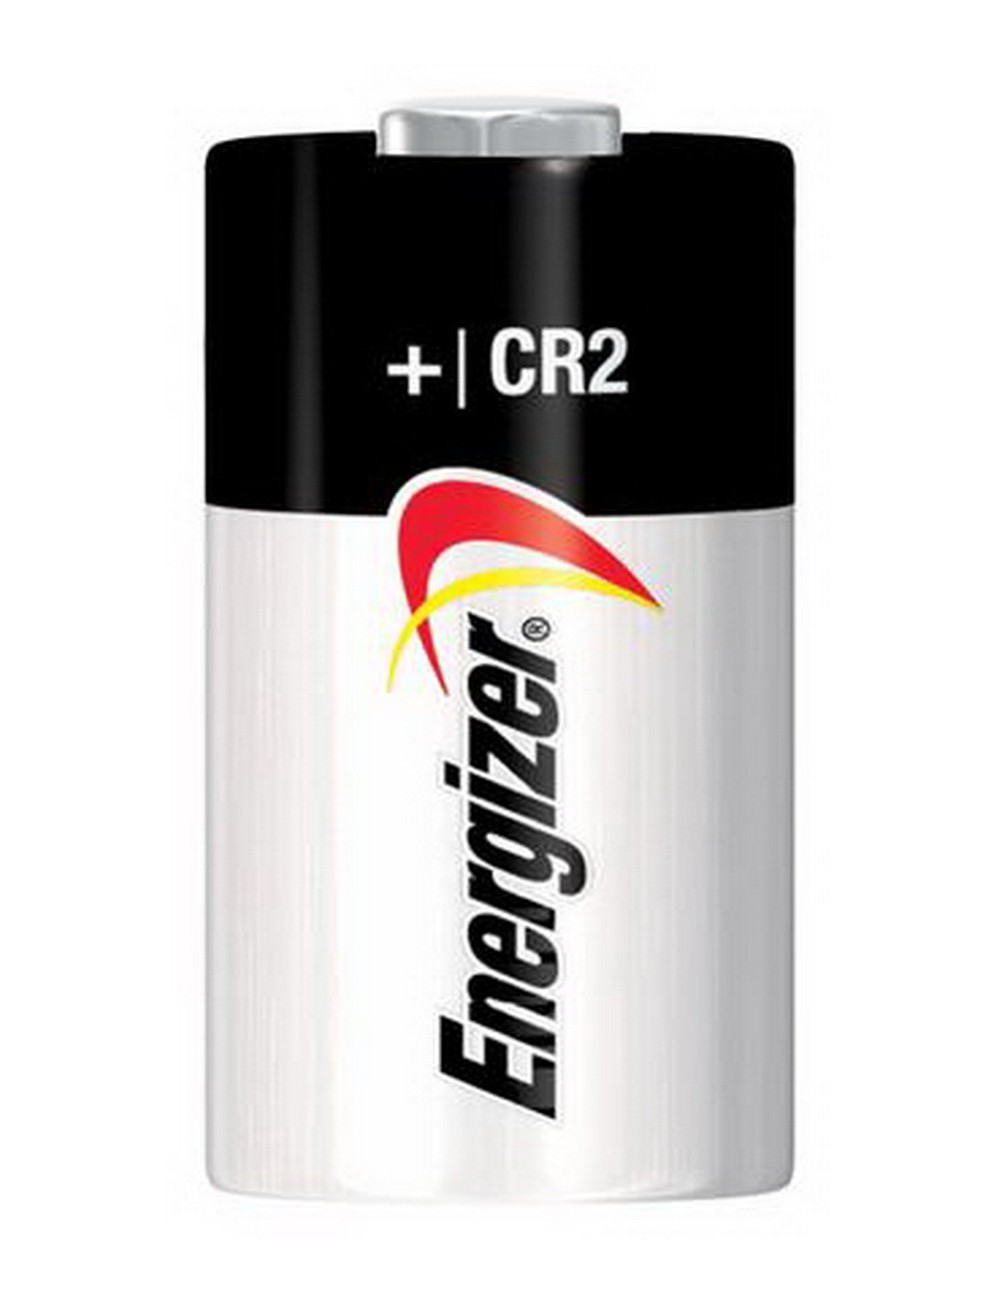 Lithium battery CR2 3V 800mAh (Energizer)